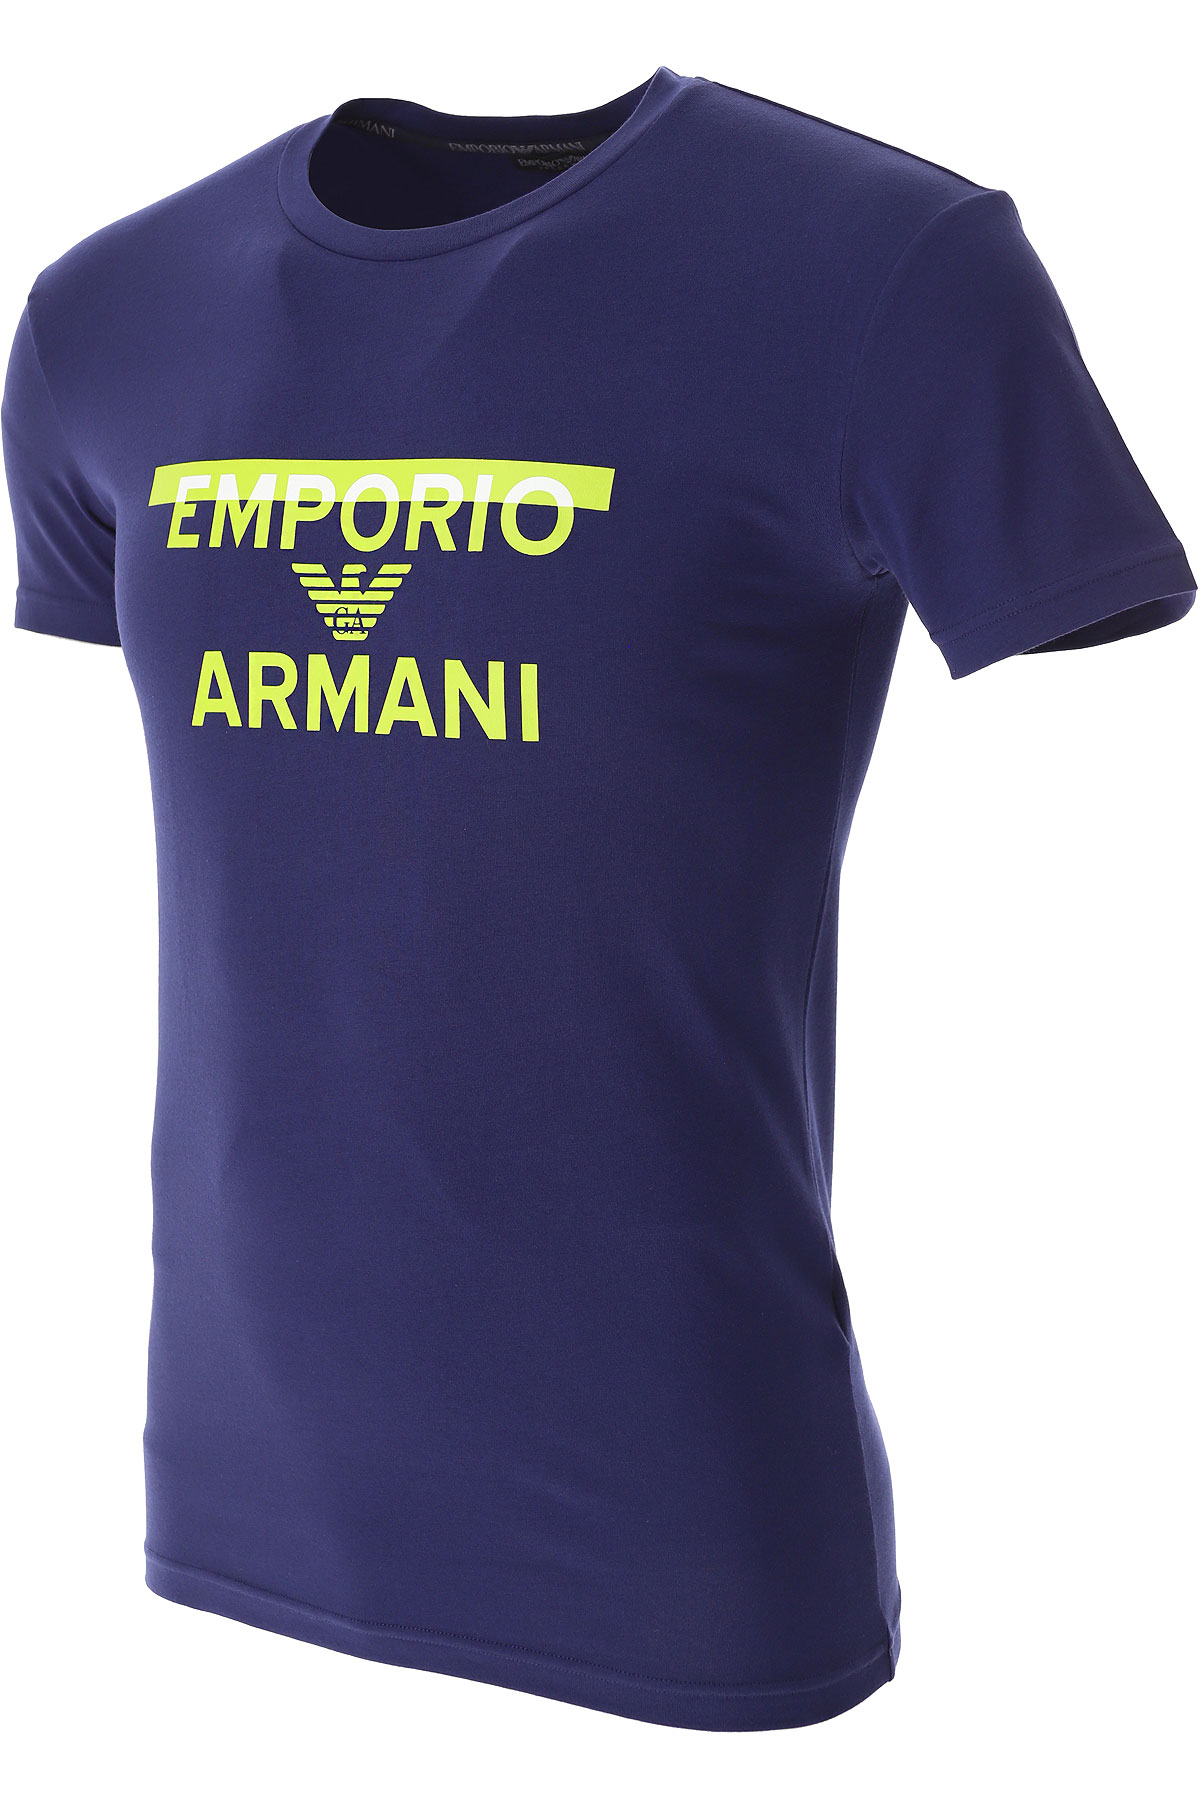 Tee shirt Emporio Armani homme Blanc 111035